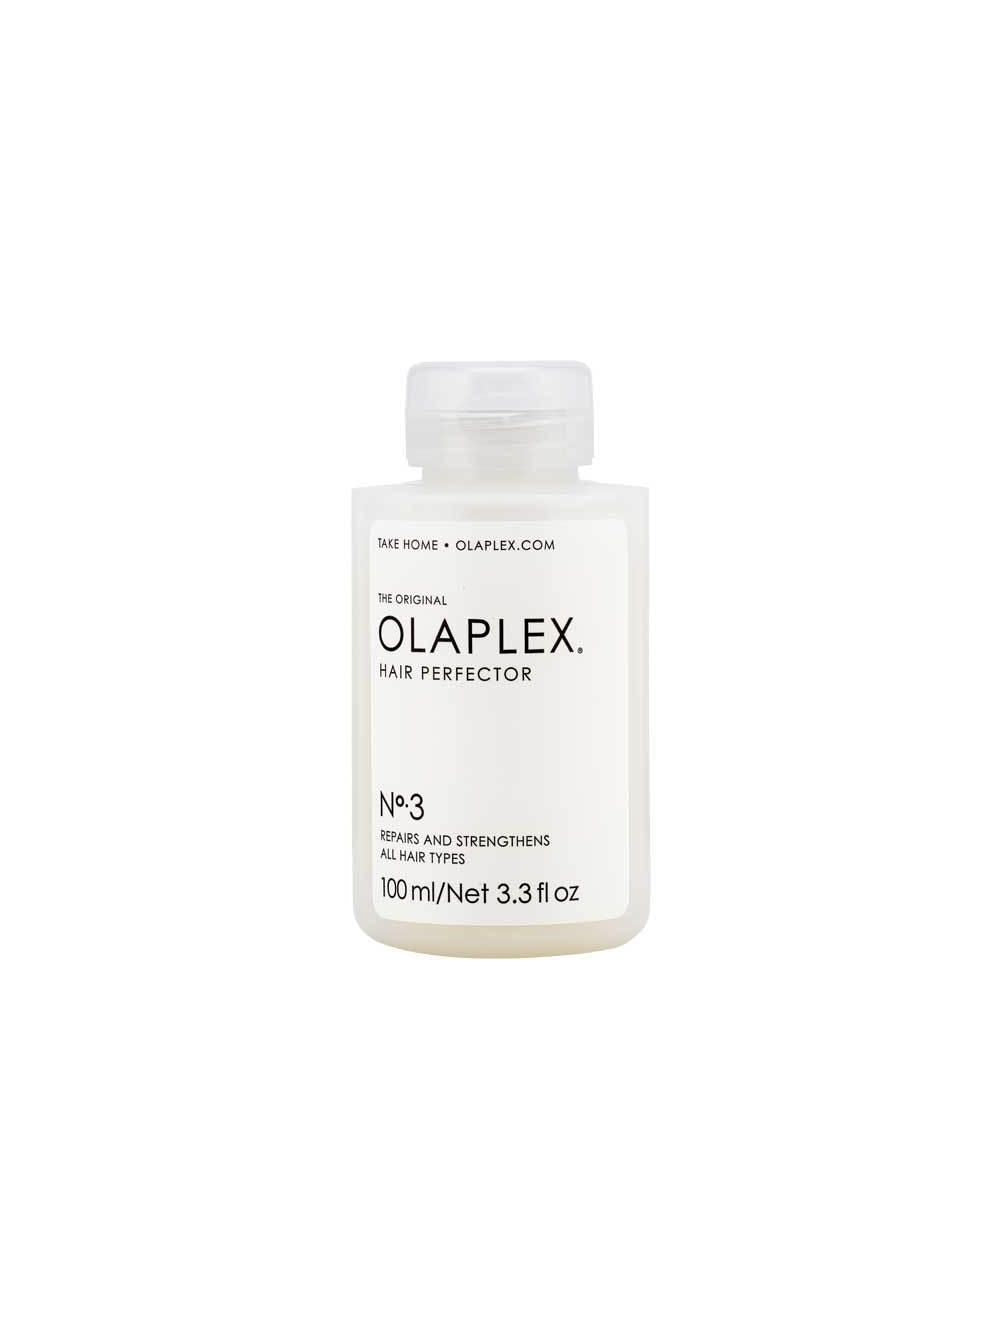 Olaplex no3 - Traitement